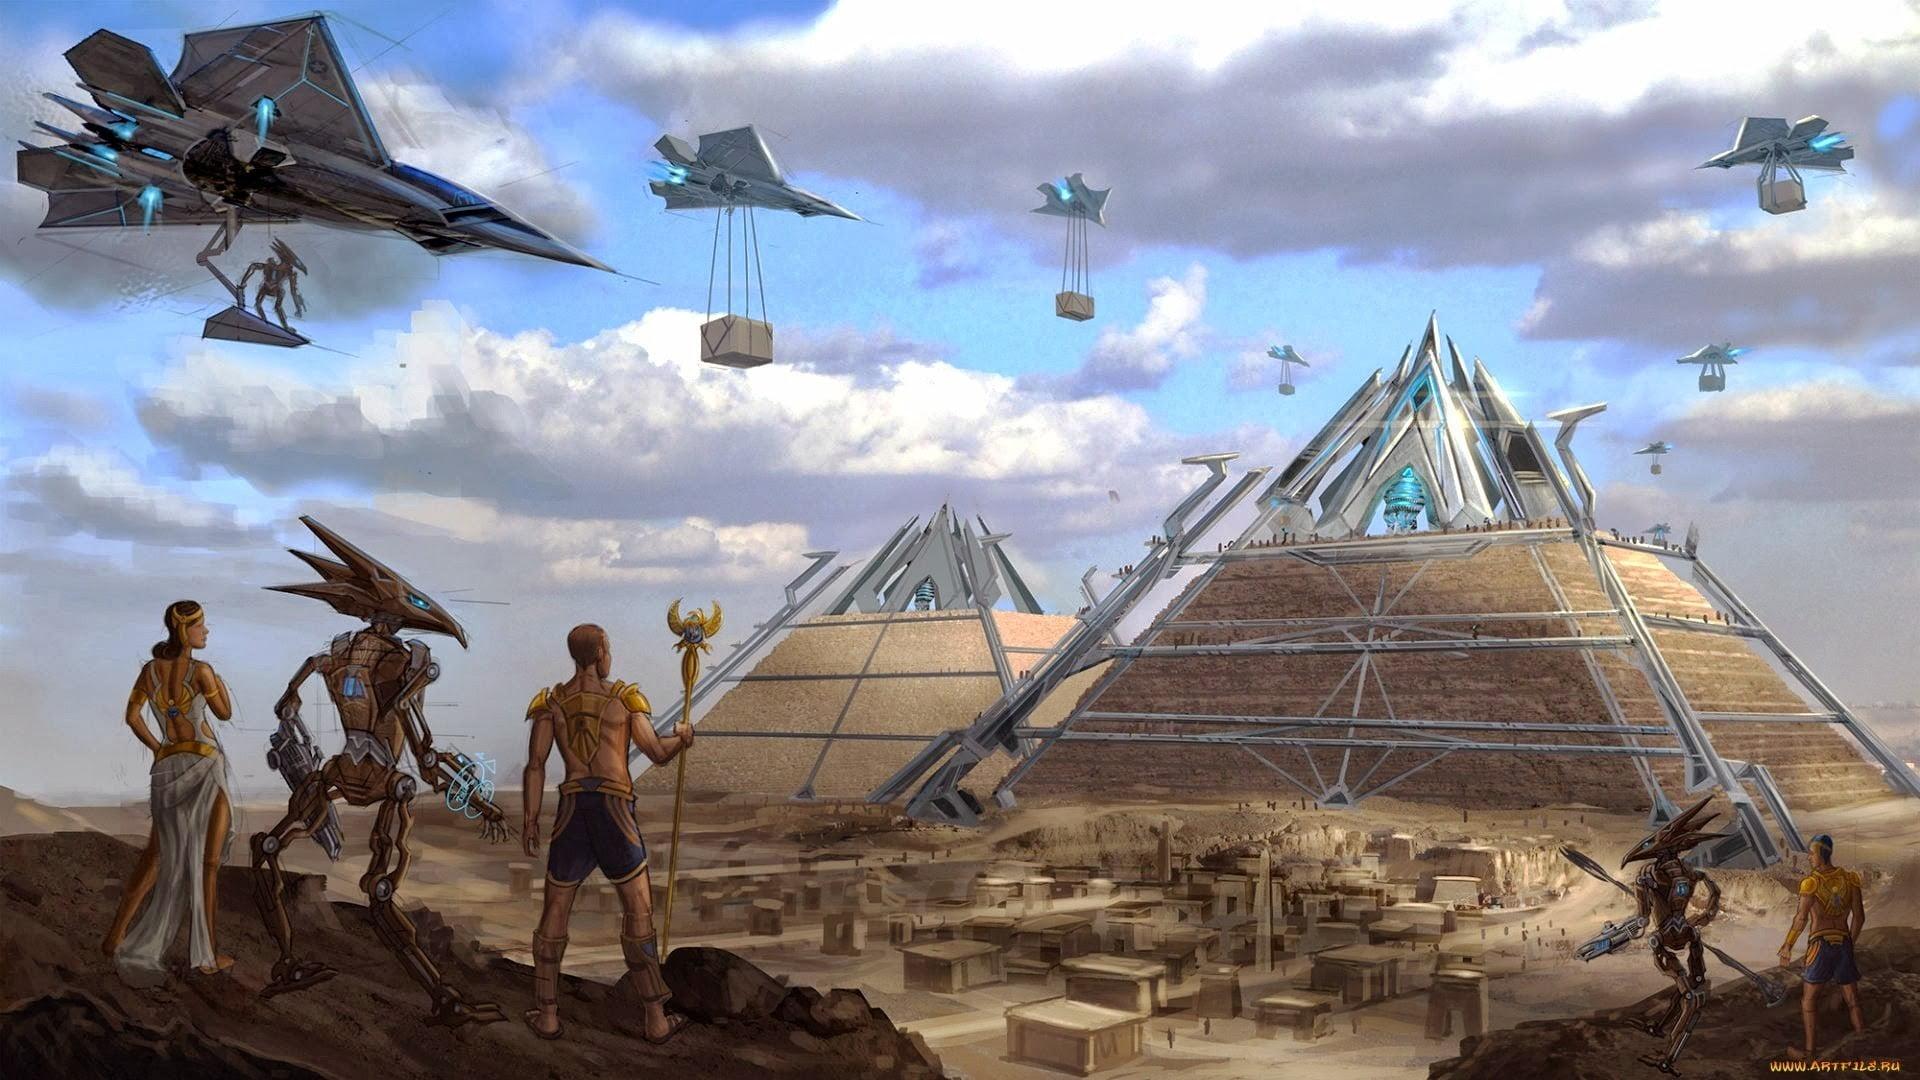 Illustration of pyramids and aliens, pyramid, fantasy art